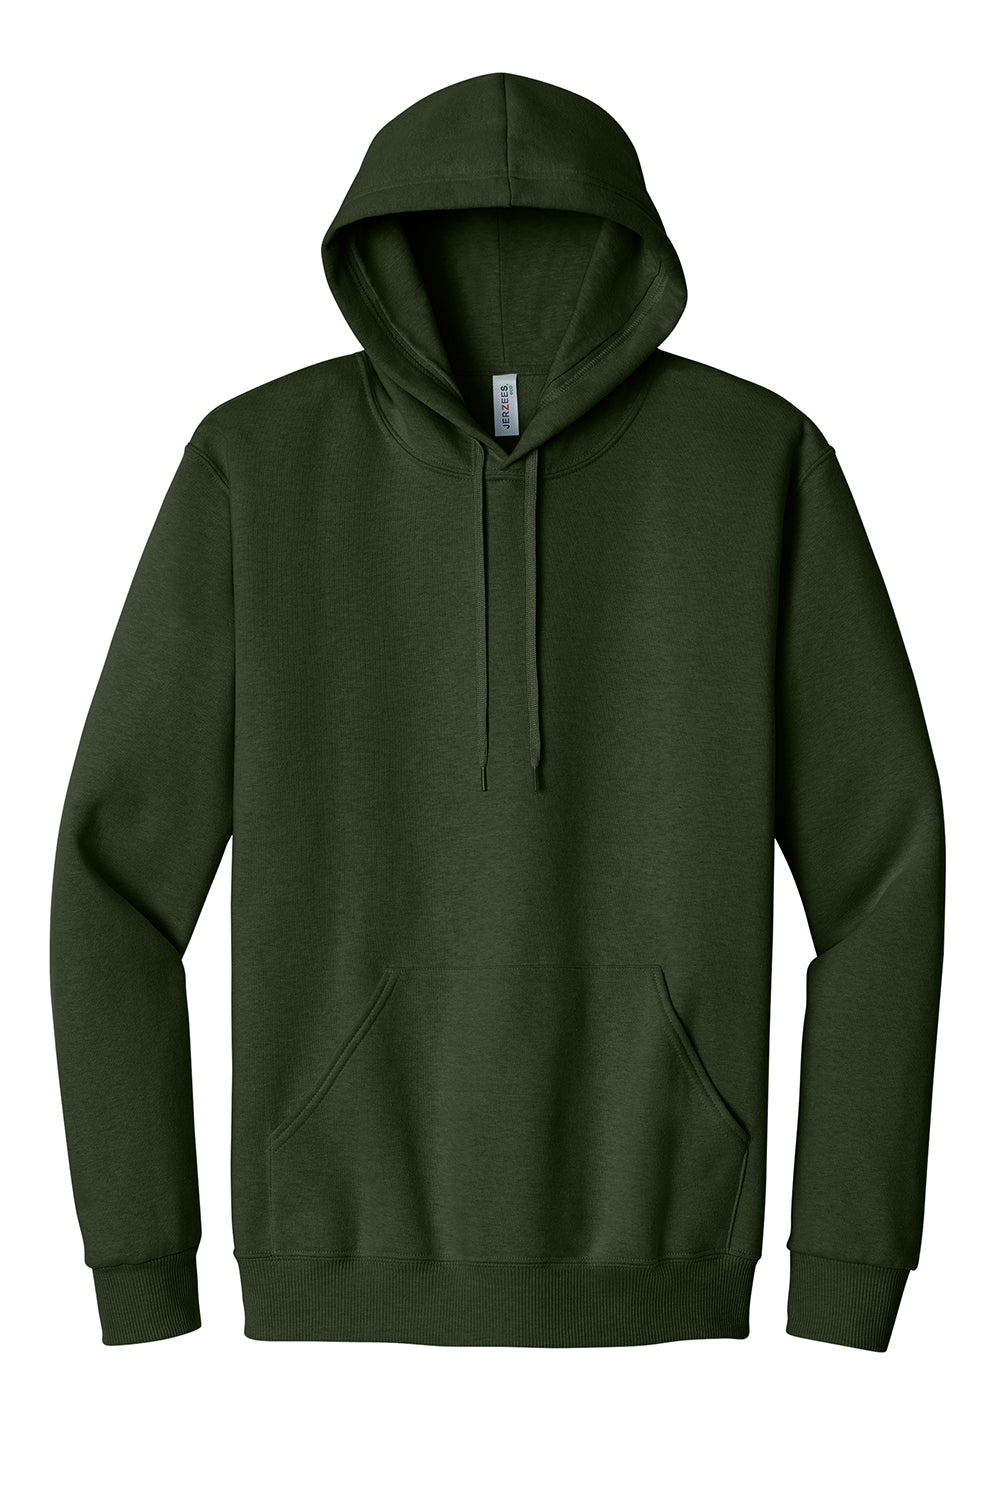 Jerzees 700M Mens Eco Premium Hooded Sweatshirt Hoodie Heather Military Green Flat Front